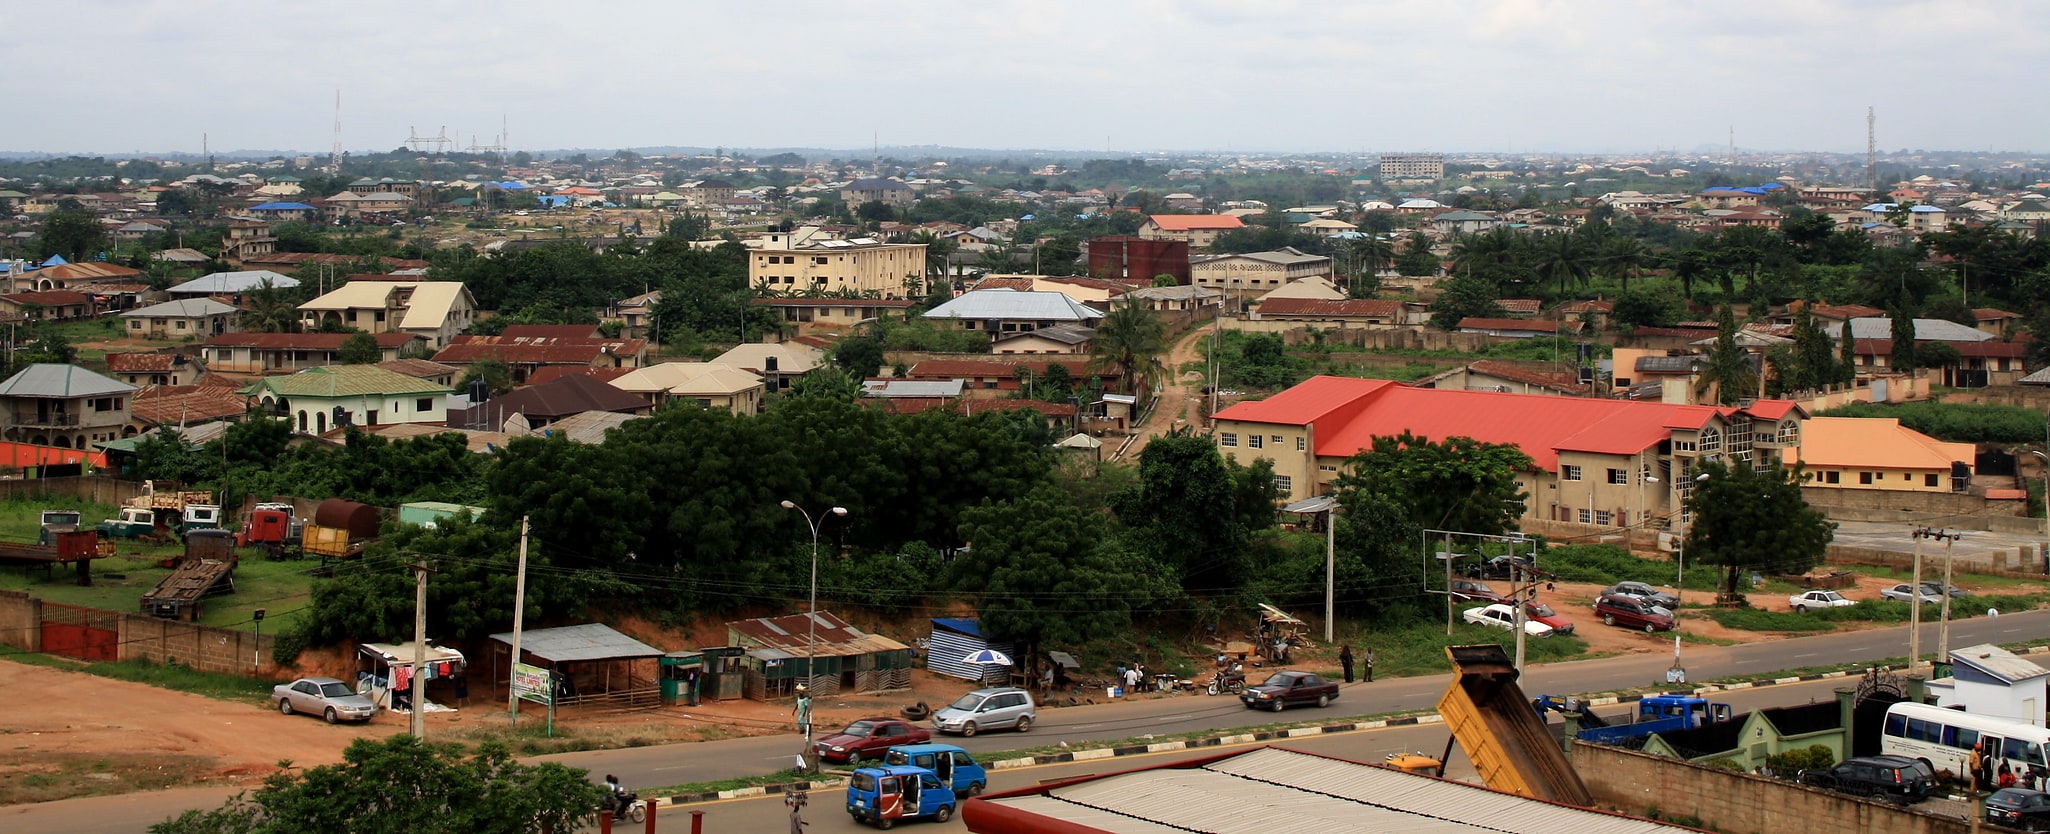 Oshogbo, Nigeria